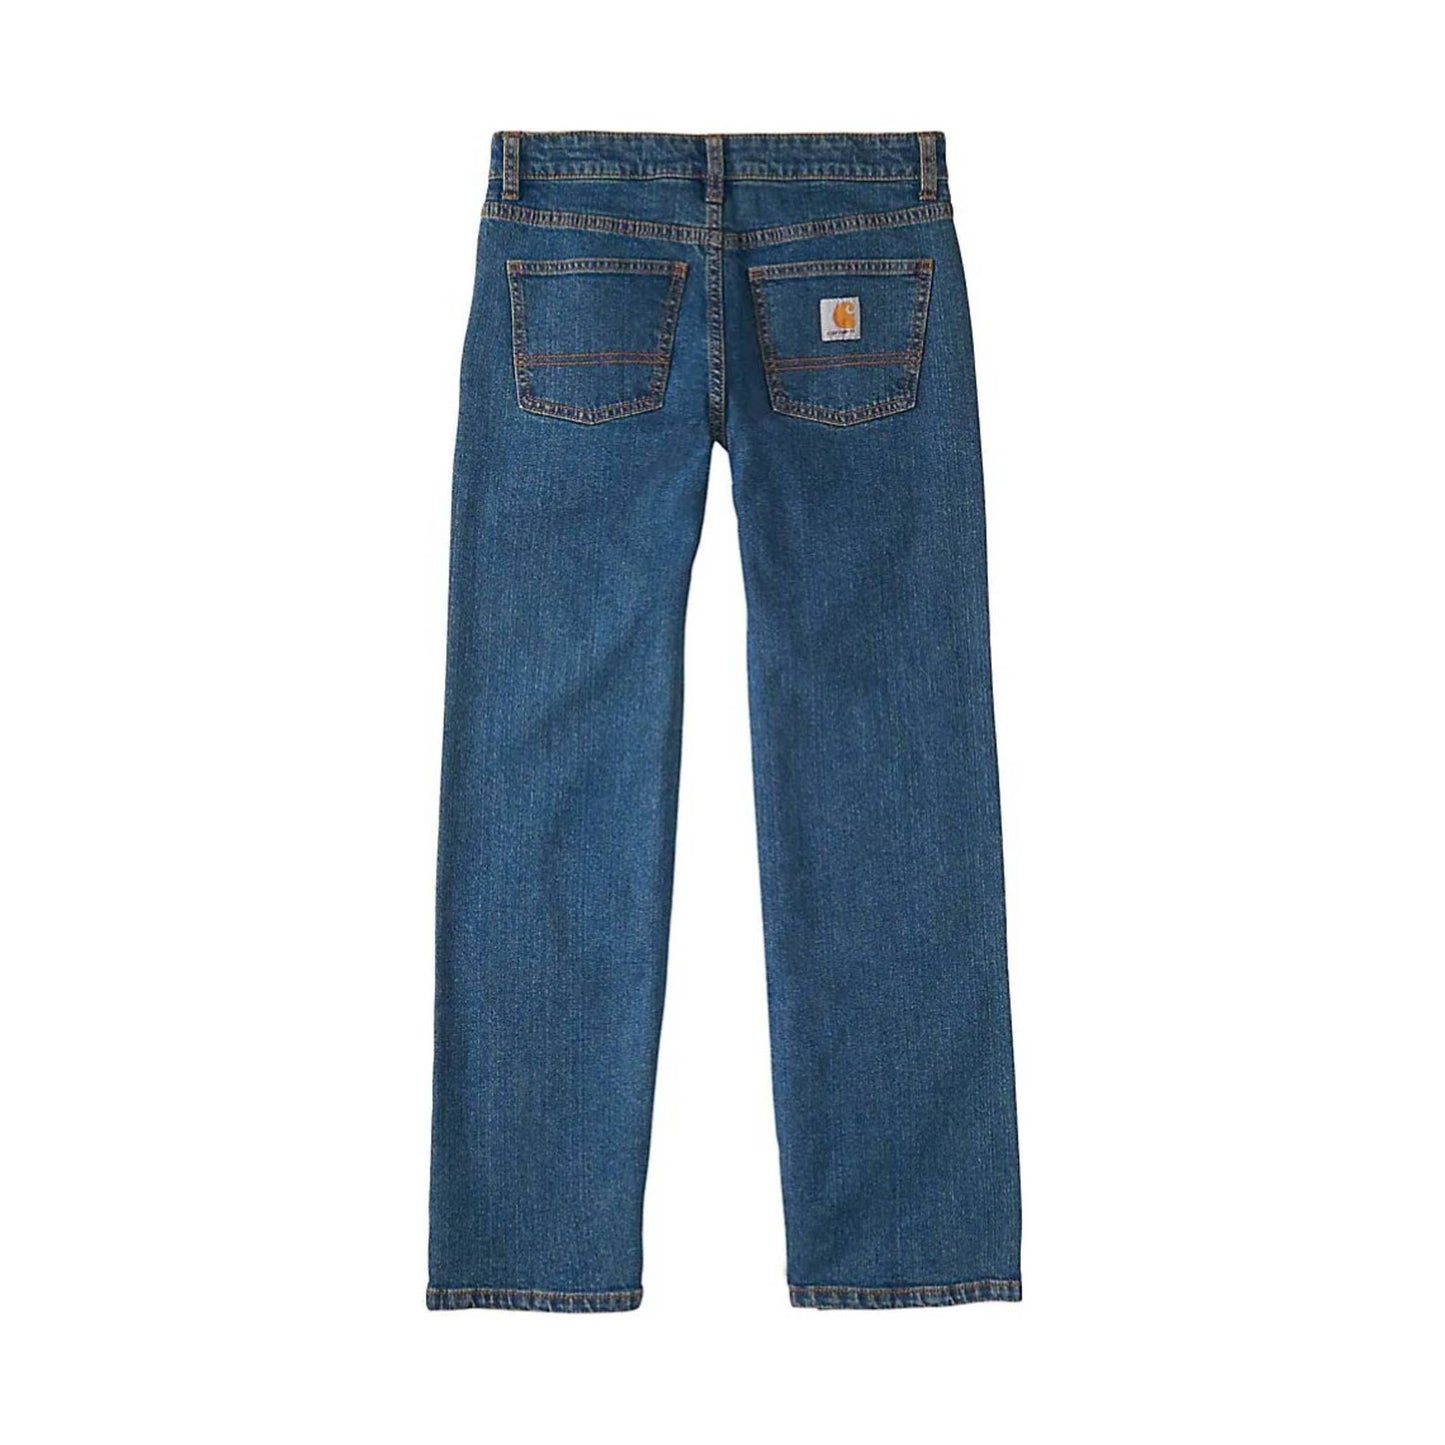 Carhartt Kids' Denim 5-Pocket Jean 4-7 - Medium Wash